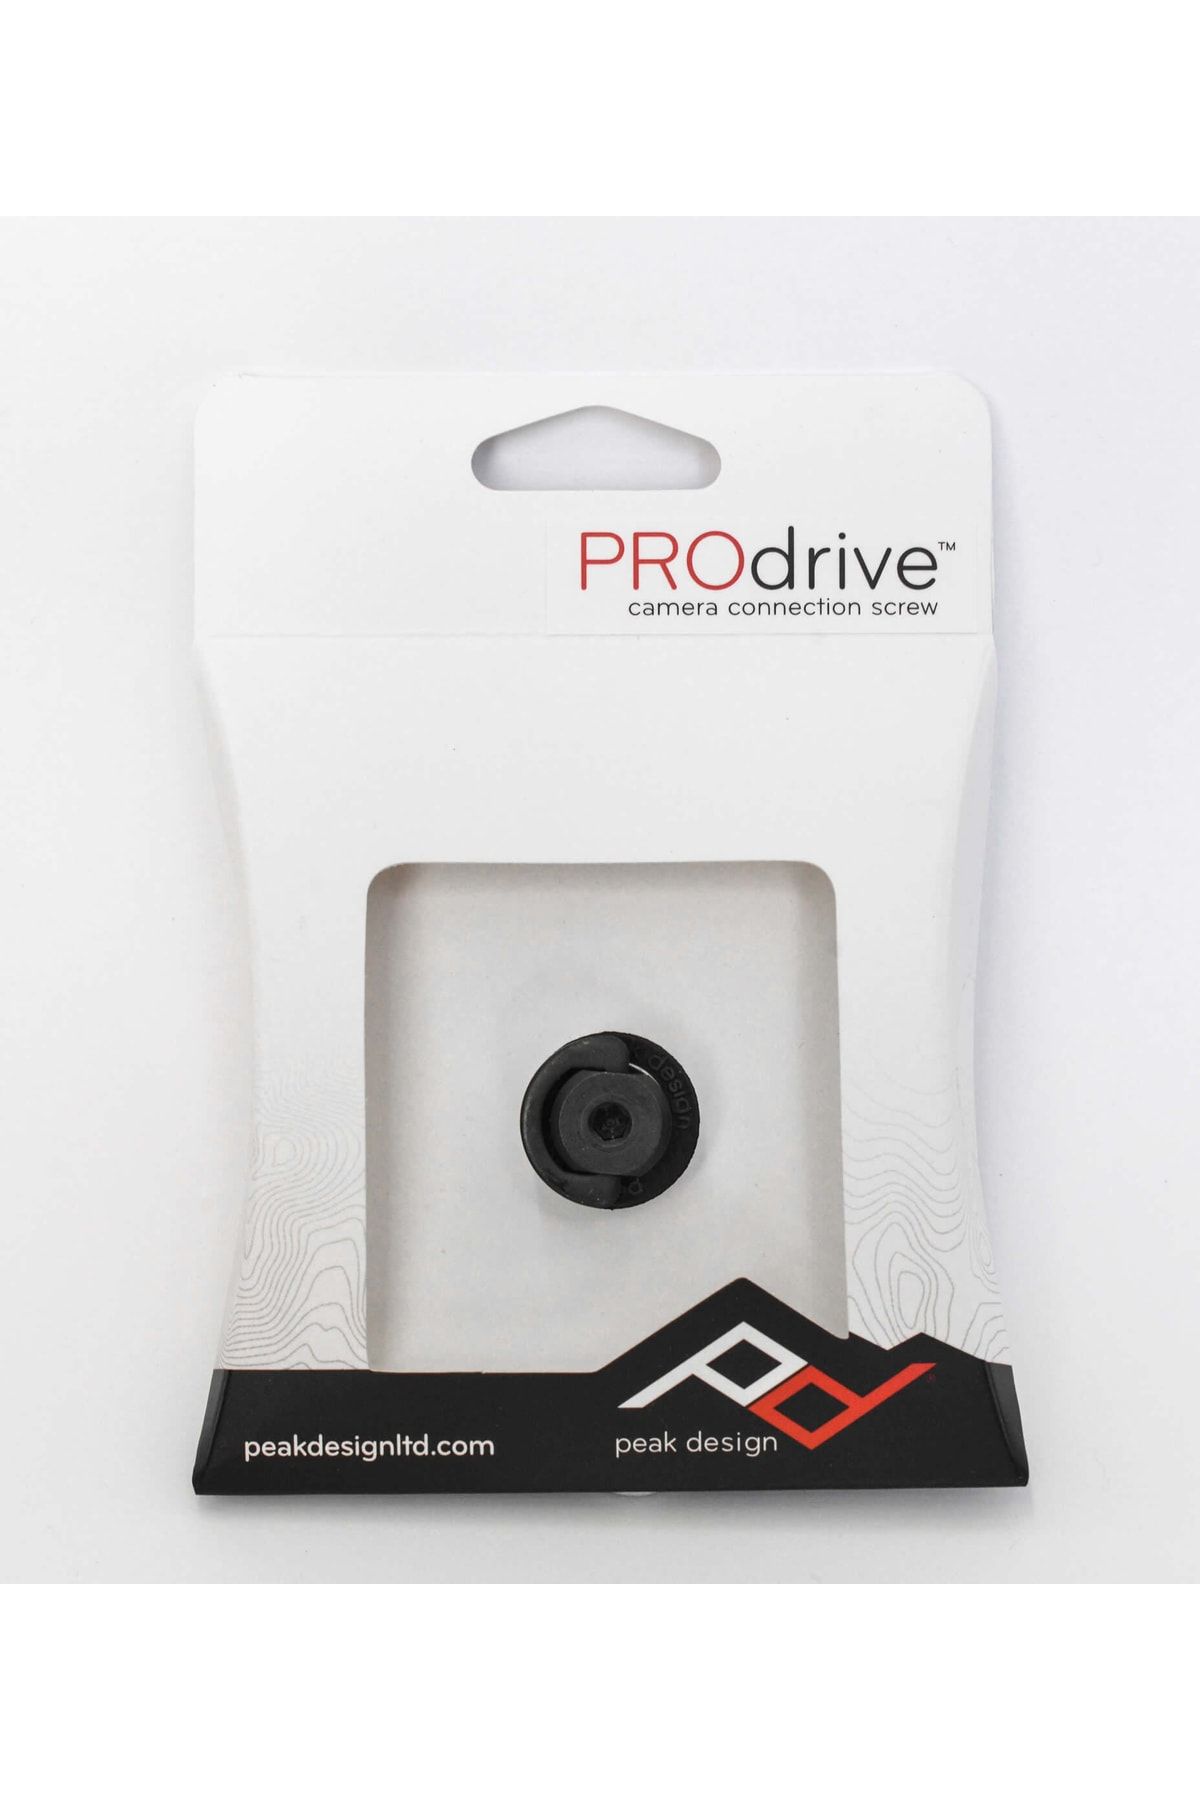 Peak Design Prodrive™ Camera Connection Screw